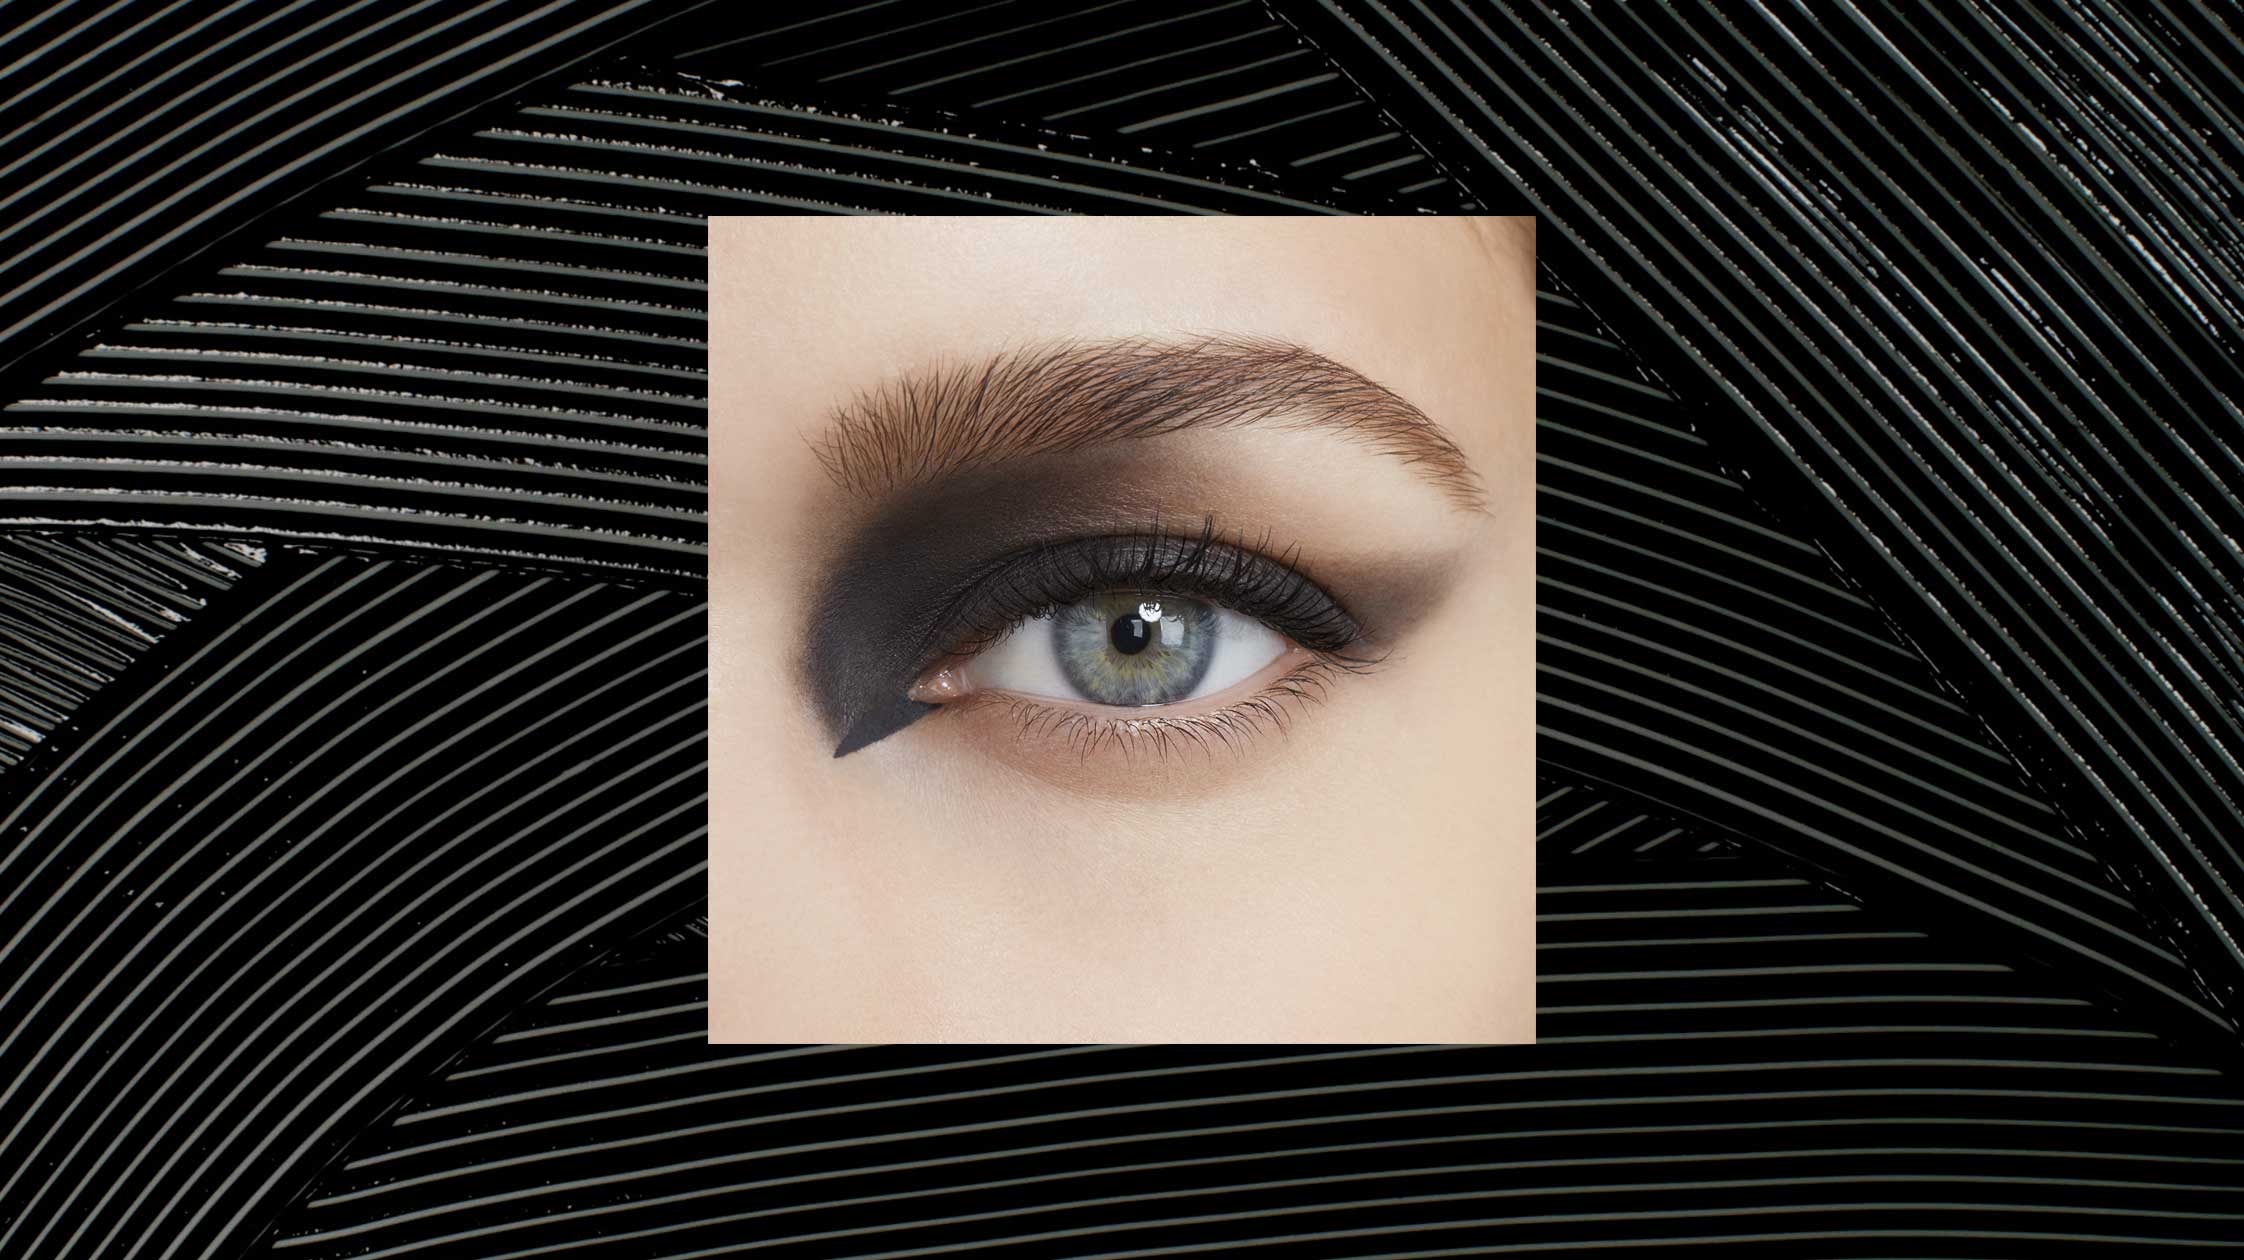 à¸à¸¥à¸à¸²à¸£à¸à¹à¸à¸«à¸²à¸£à¸¹à¸à¸�à¸²à¸à¸ªà¸³à¸«à¸£à¸±à¸ Givenchy Eye Collection Travel Makeup Palette